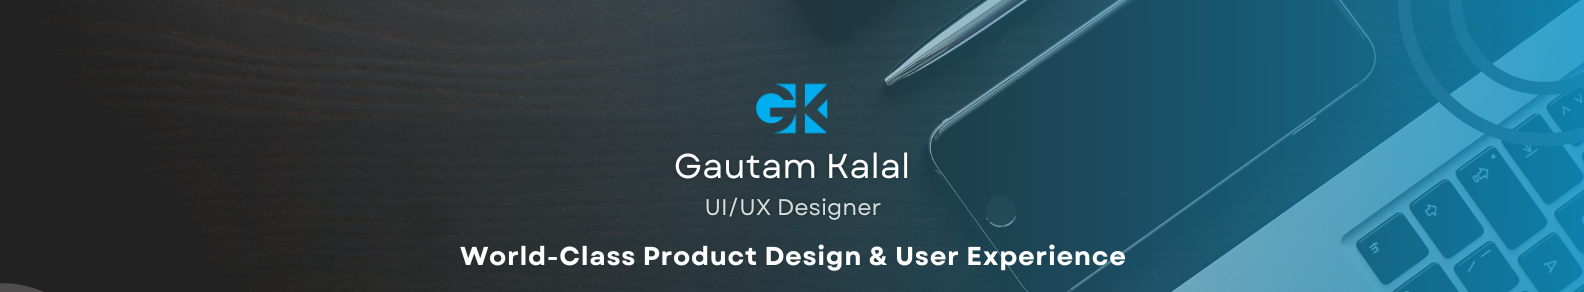 Gautam Kalal's profile banner